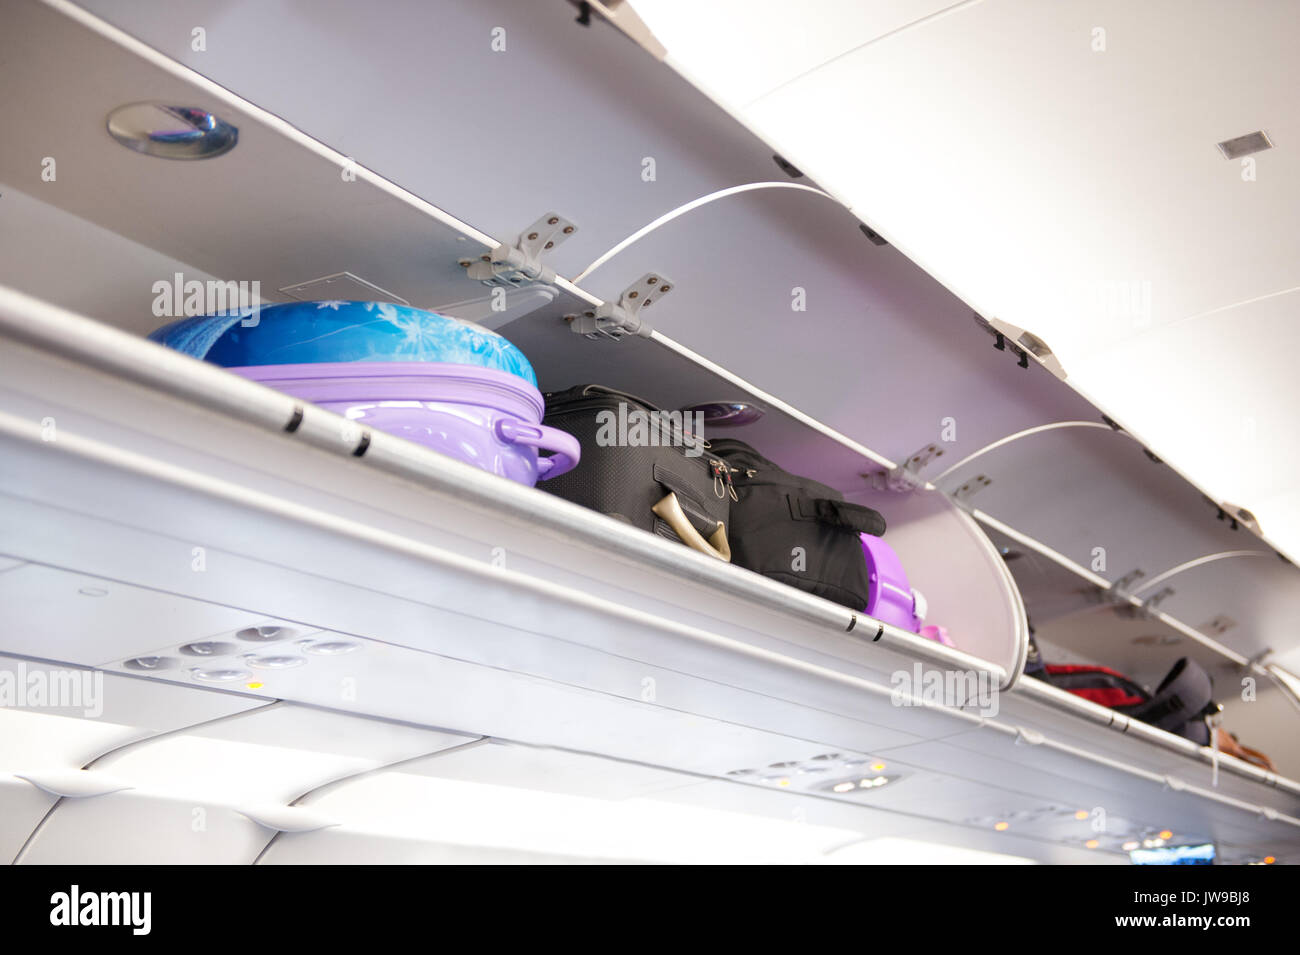 overhead locker on an airplane or plane Stock Photo